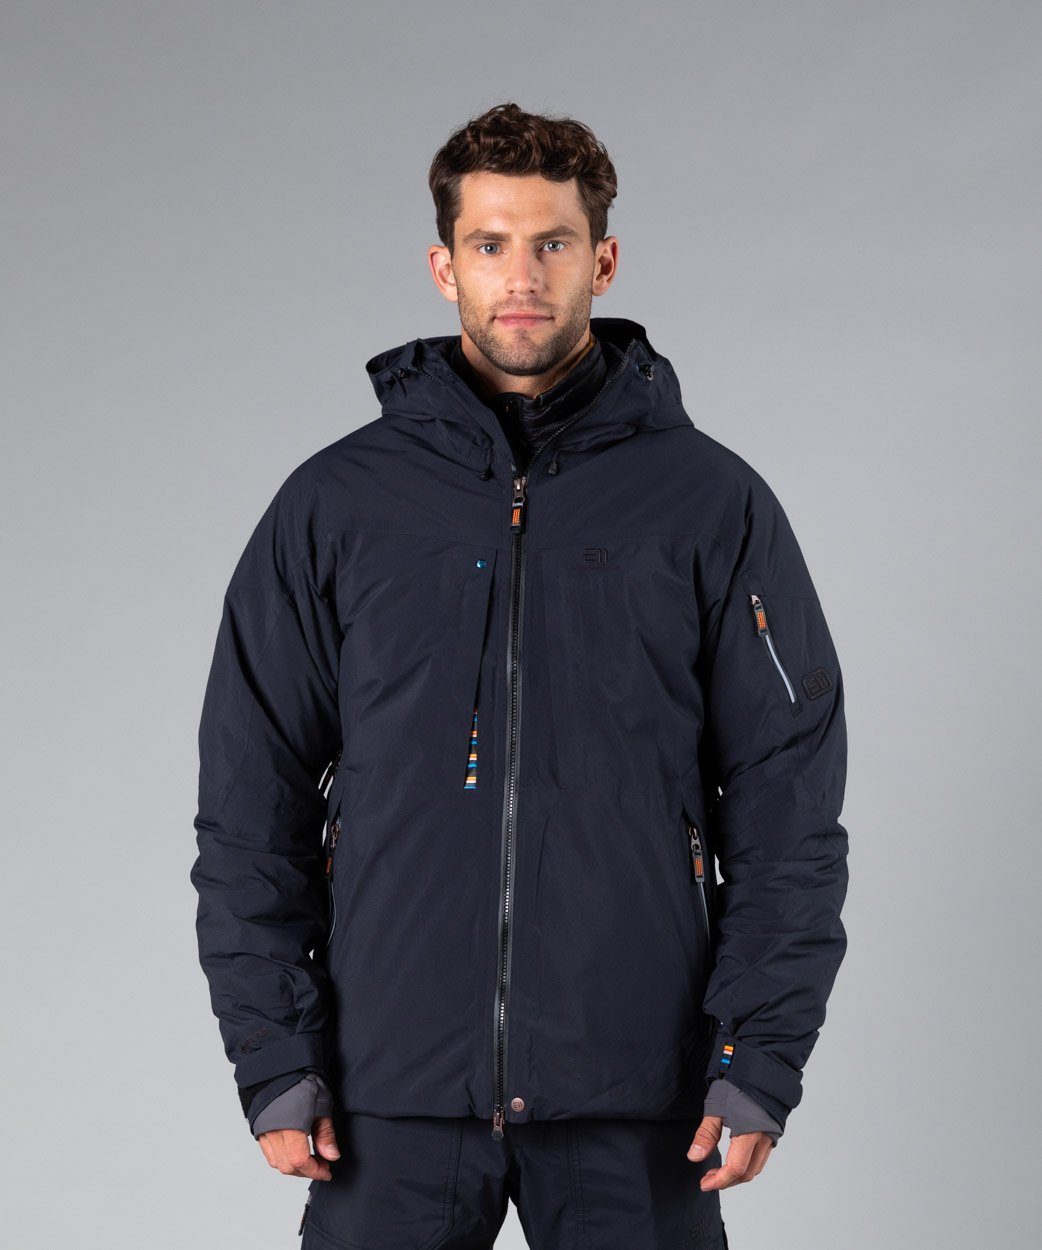 Men's Creblet Insulated Ski Jacket Ski Jackets Elevenate Black S 